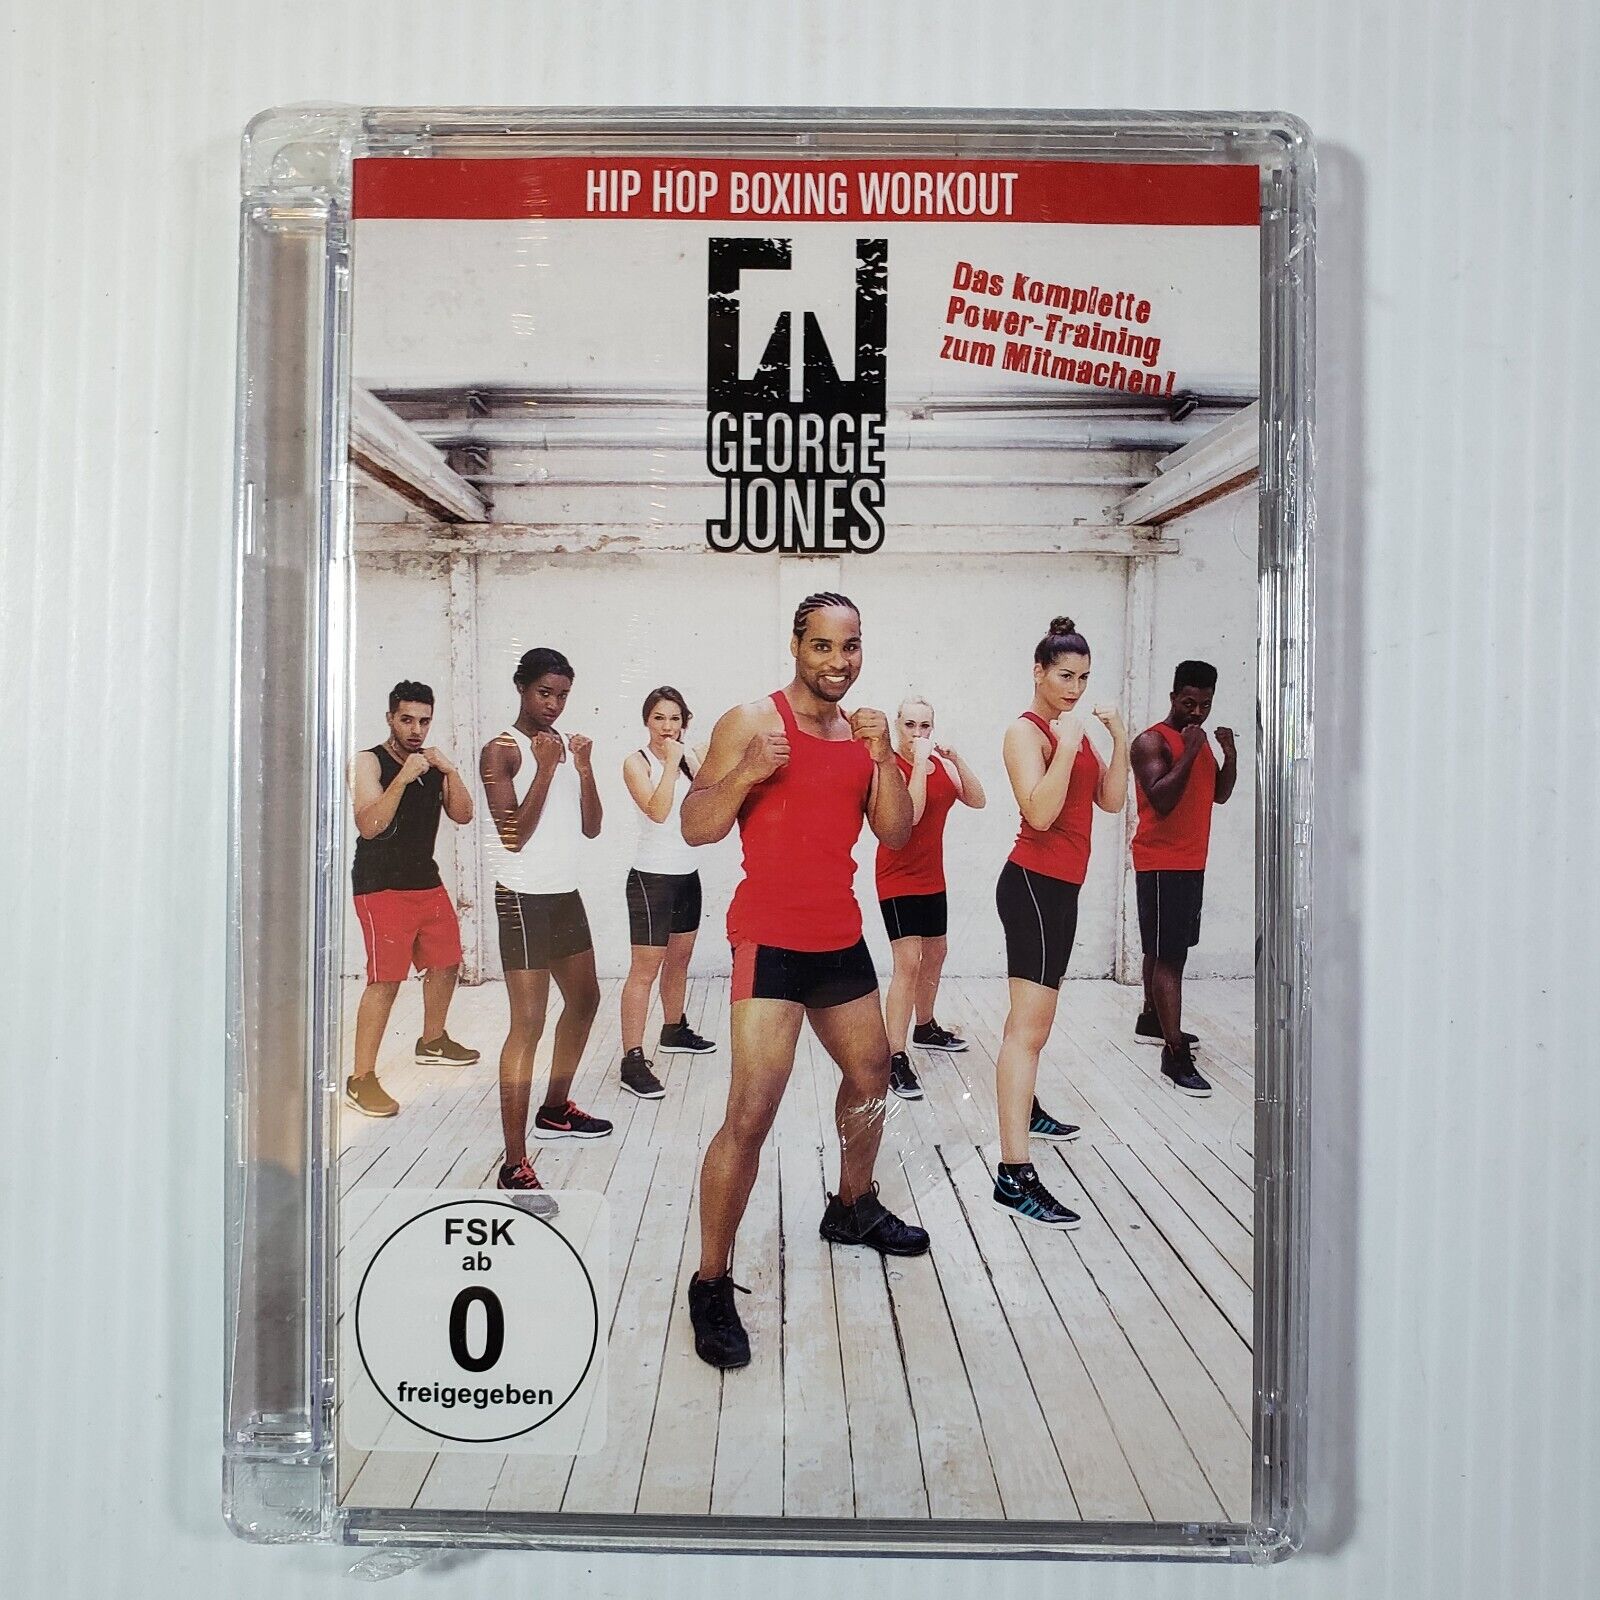 GEORGE JONES HIP HOP BOXING WORKOUT NEW DVD